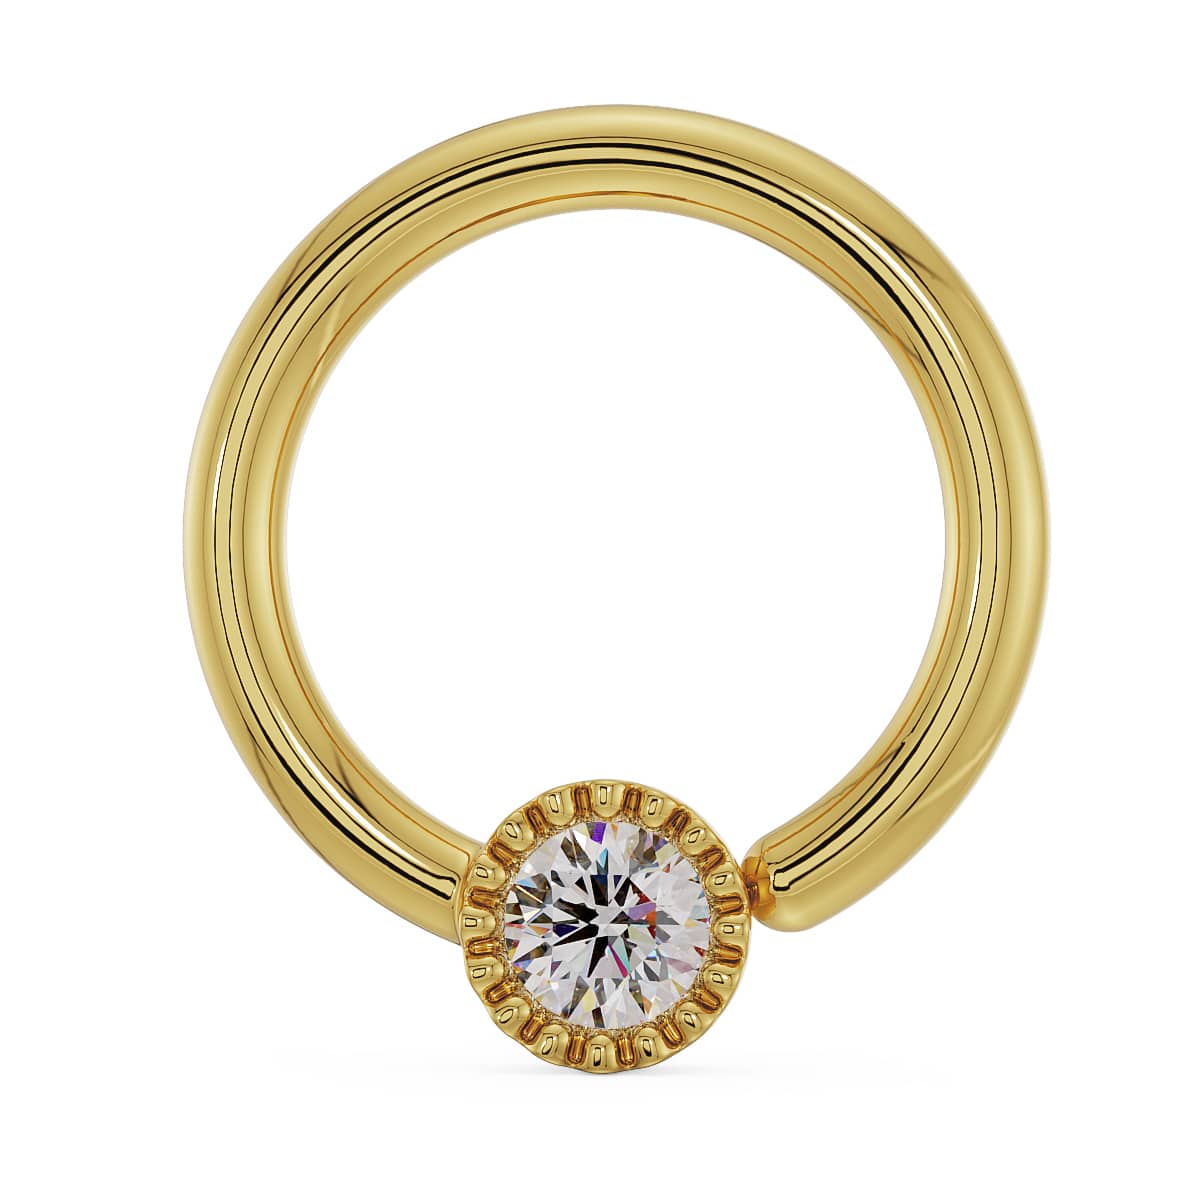 Diamond Body Jewelry | Gold and Diamond Jewelry | FreshTrends